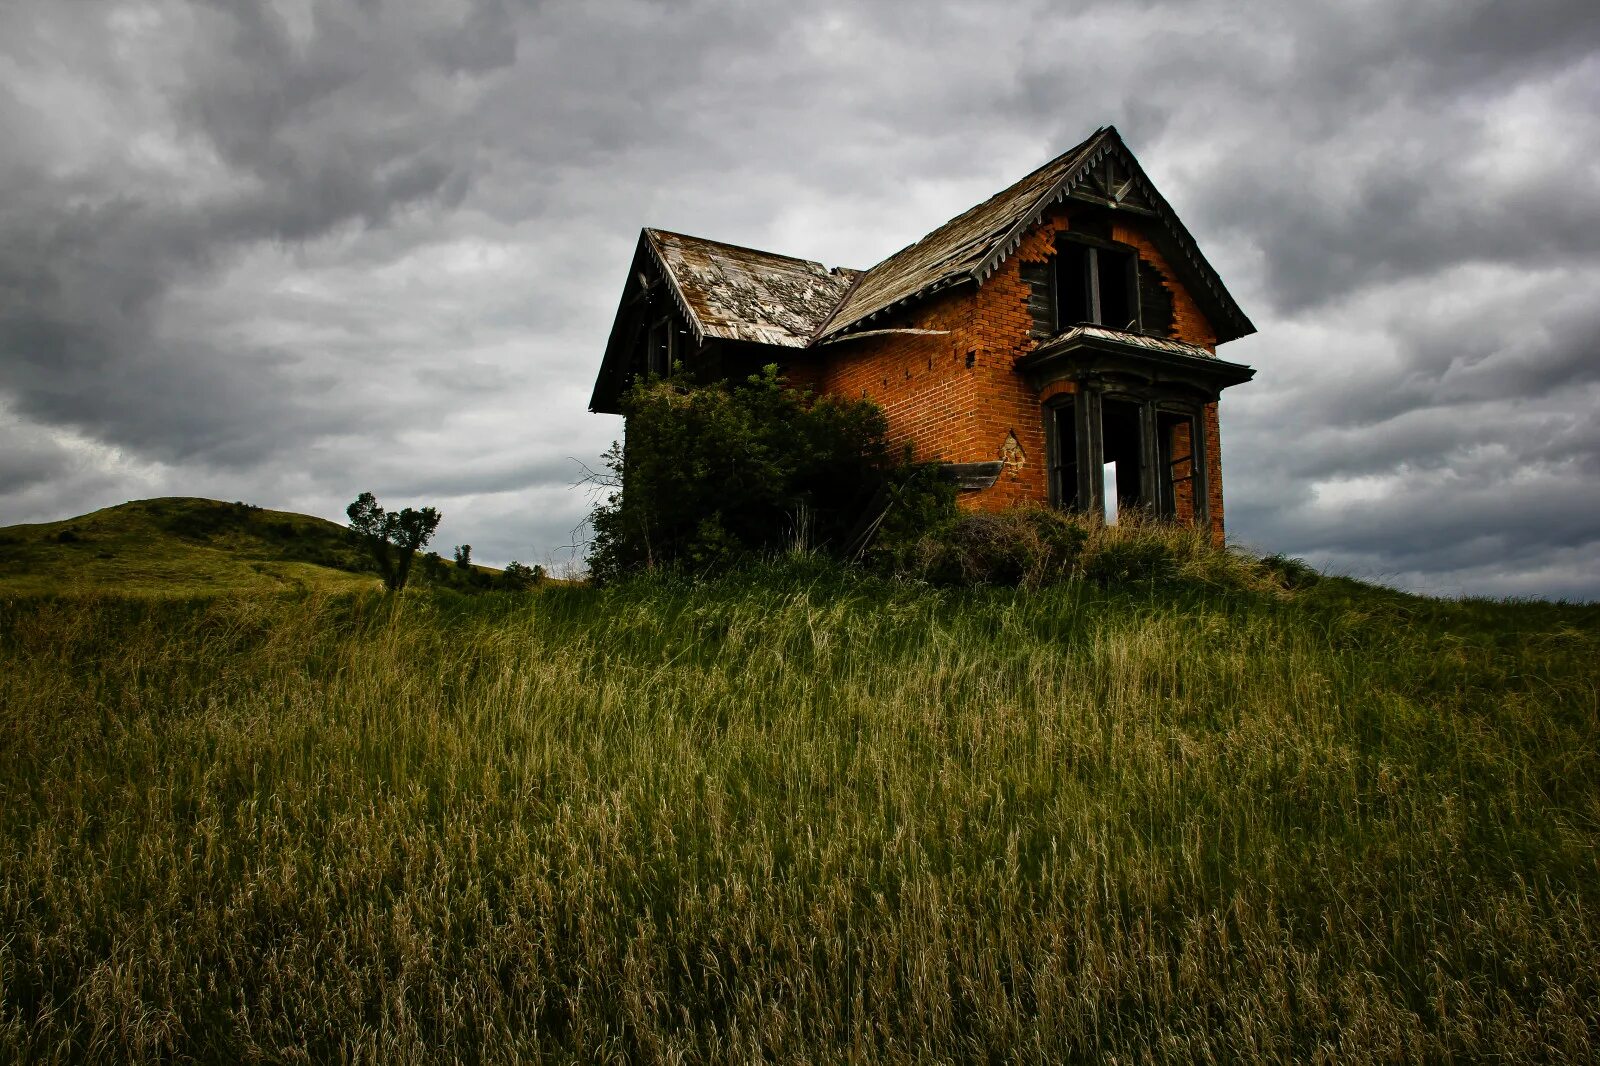 Обои старый дом. Одинокий дом в поле. Старый домик в поле. Одинокий домик. Дом в поле.